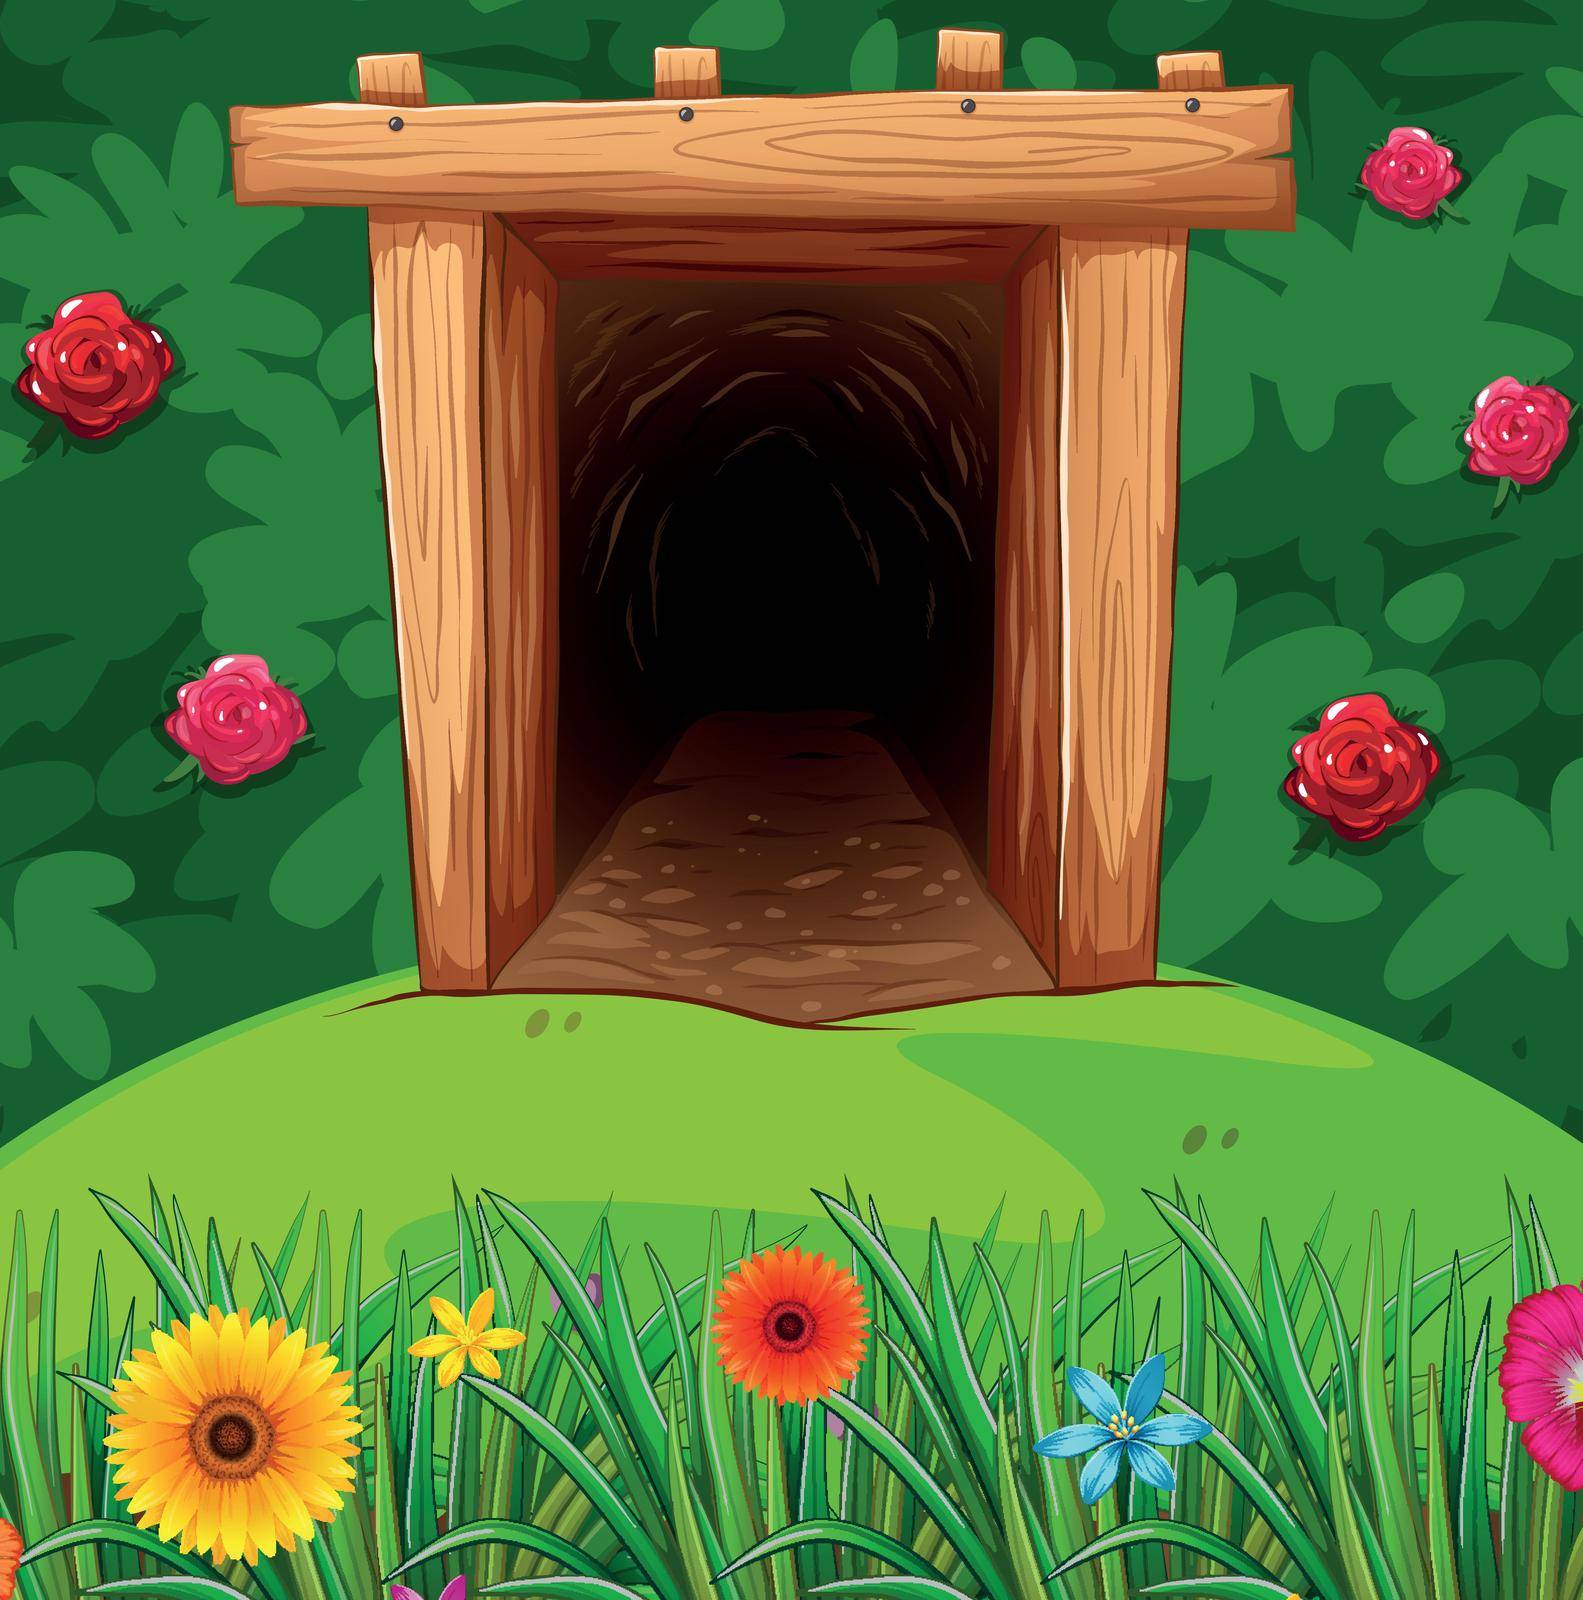 Tunnel in the bush illustration